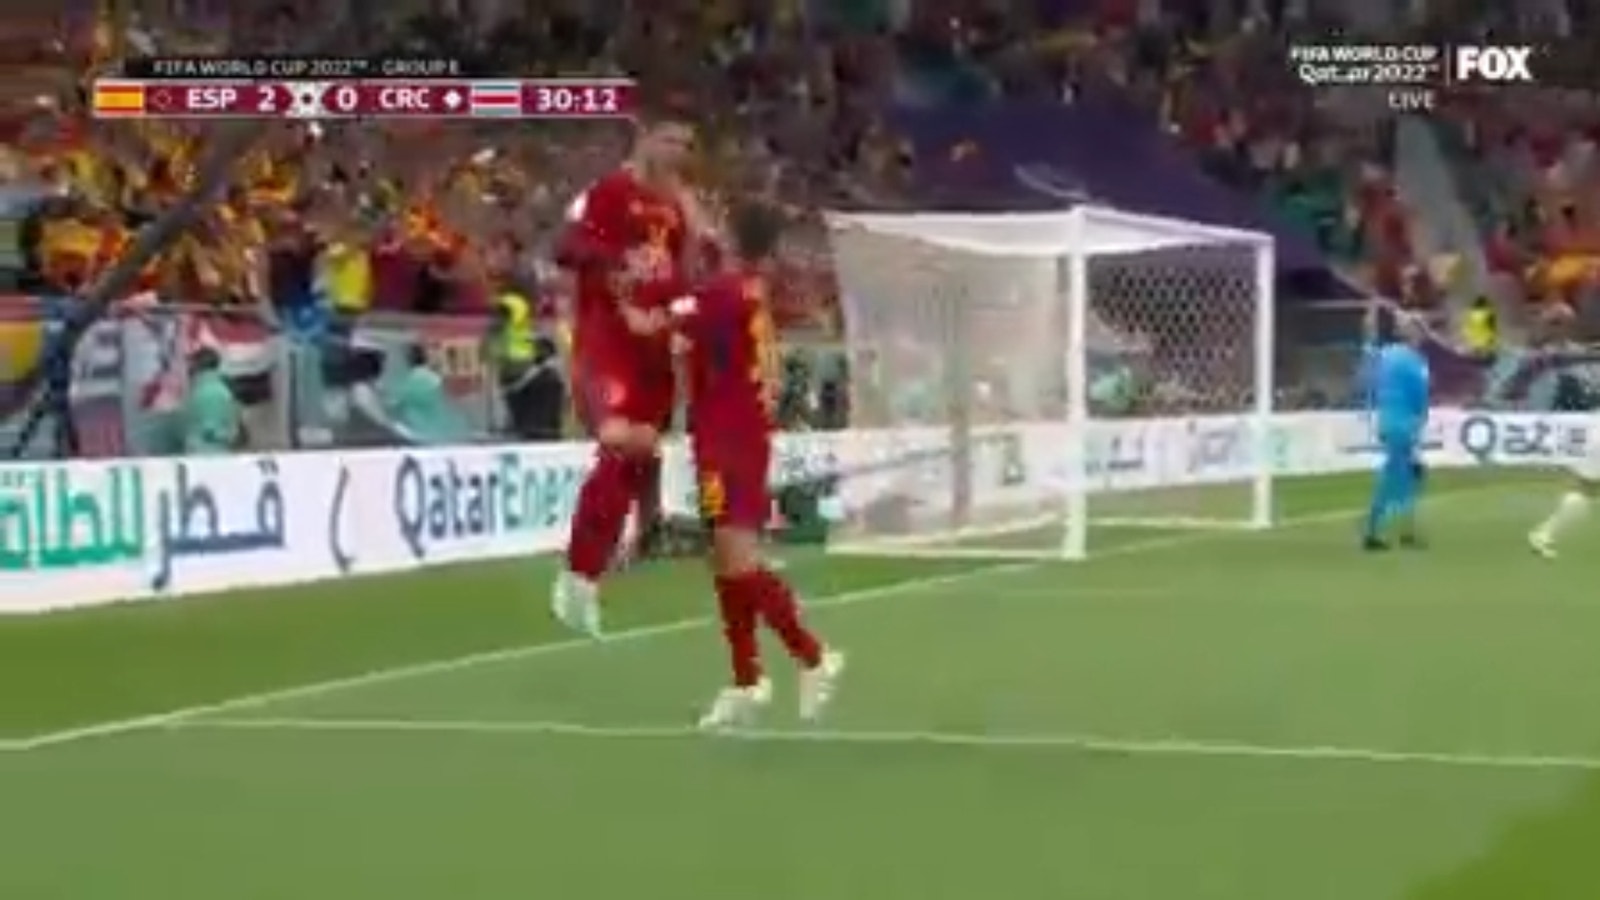 Spain's Ferran Torres scores a goal against Costa Rica in the 31st minute